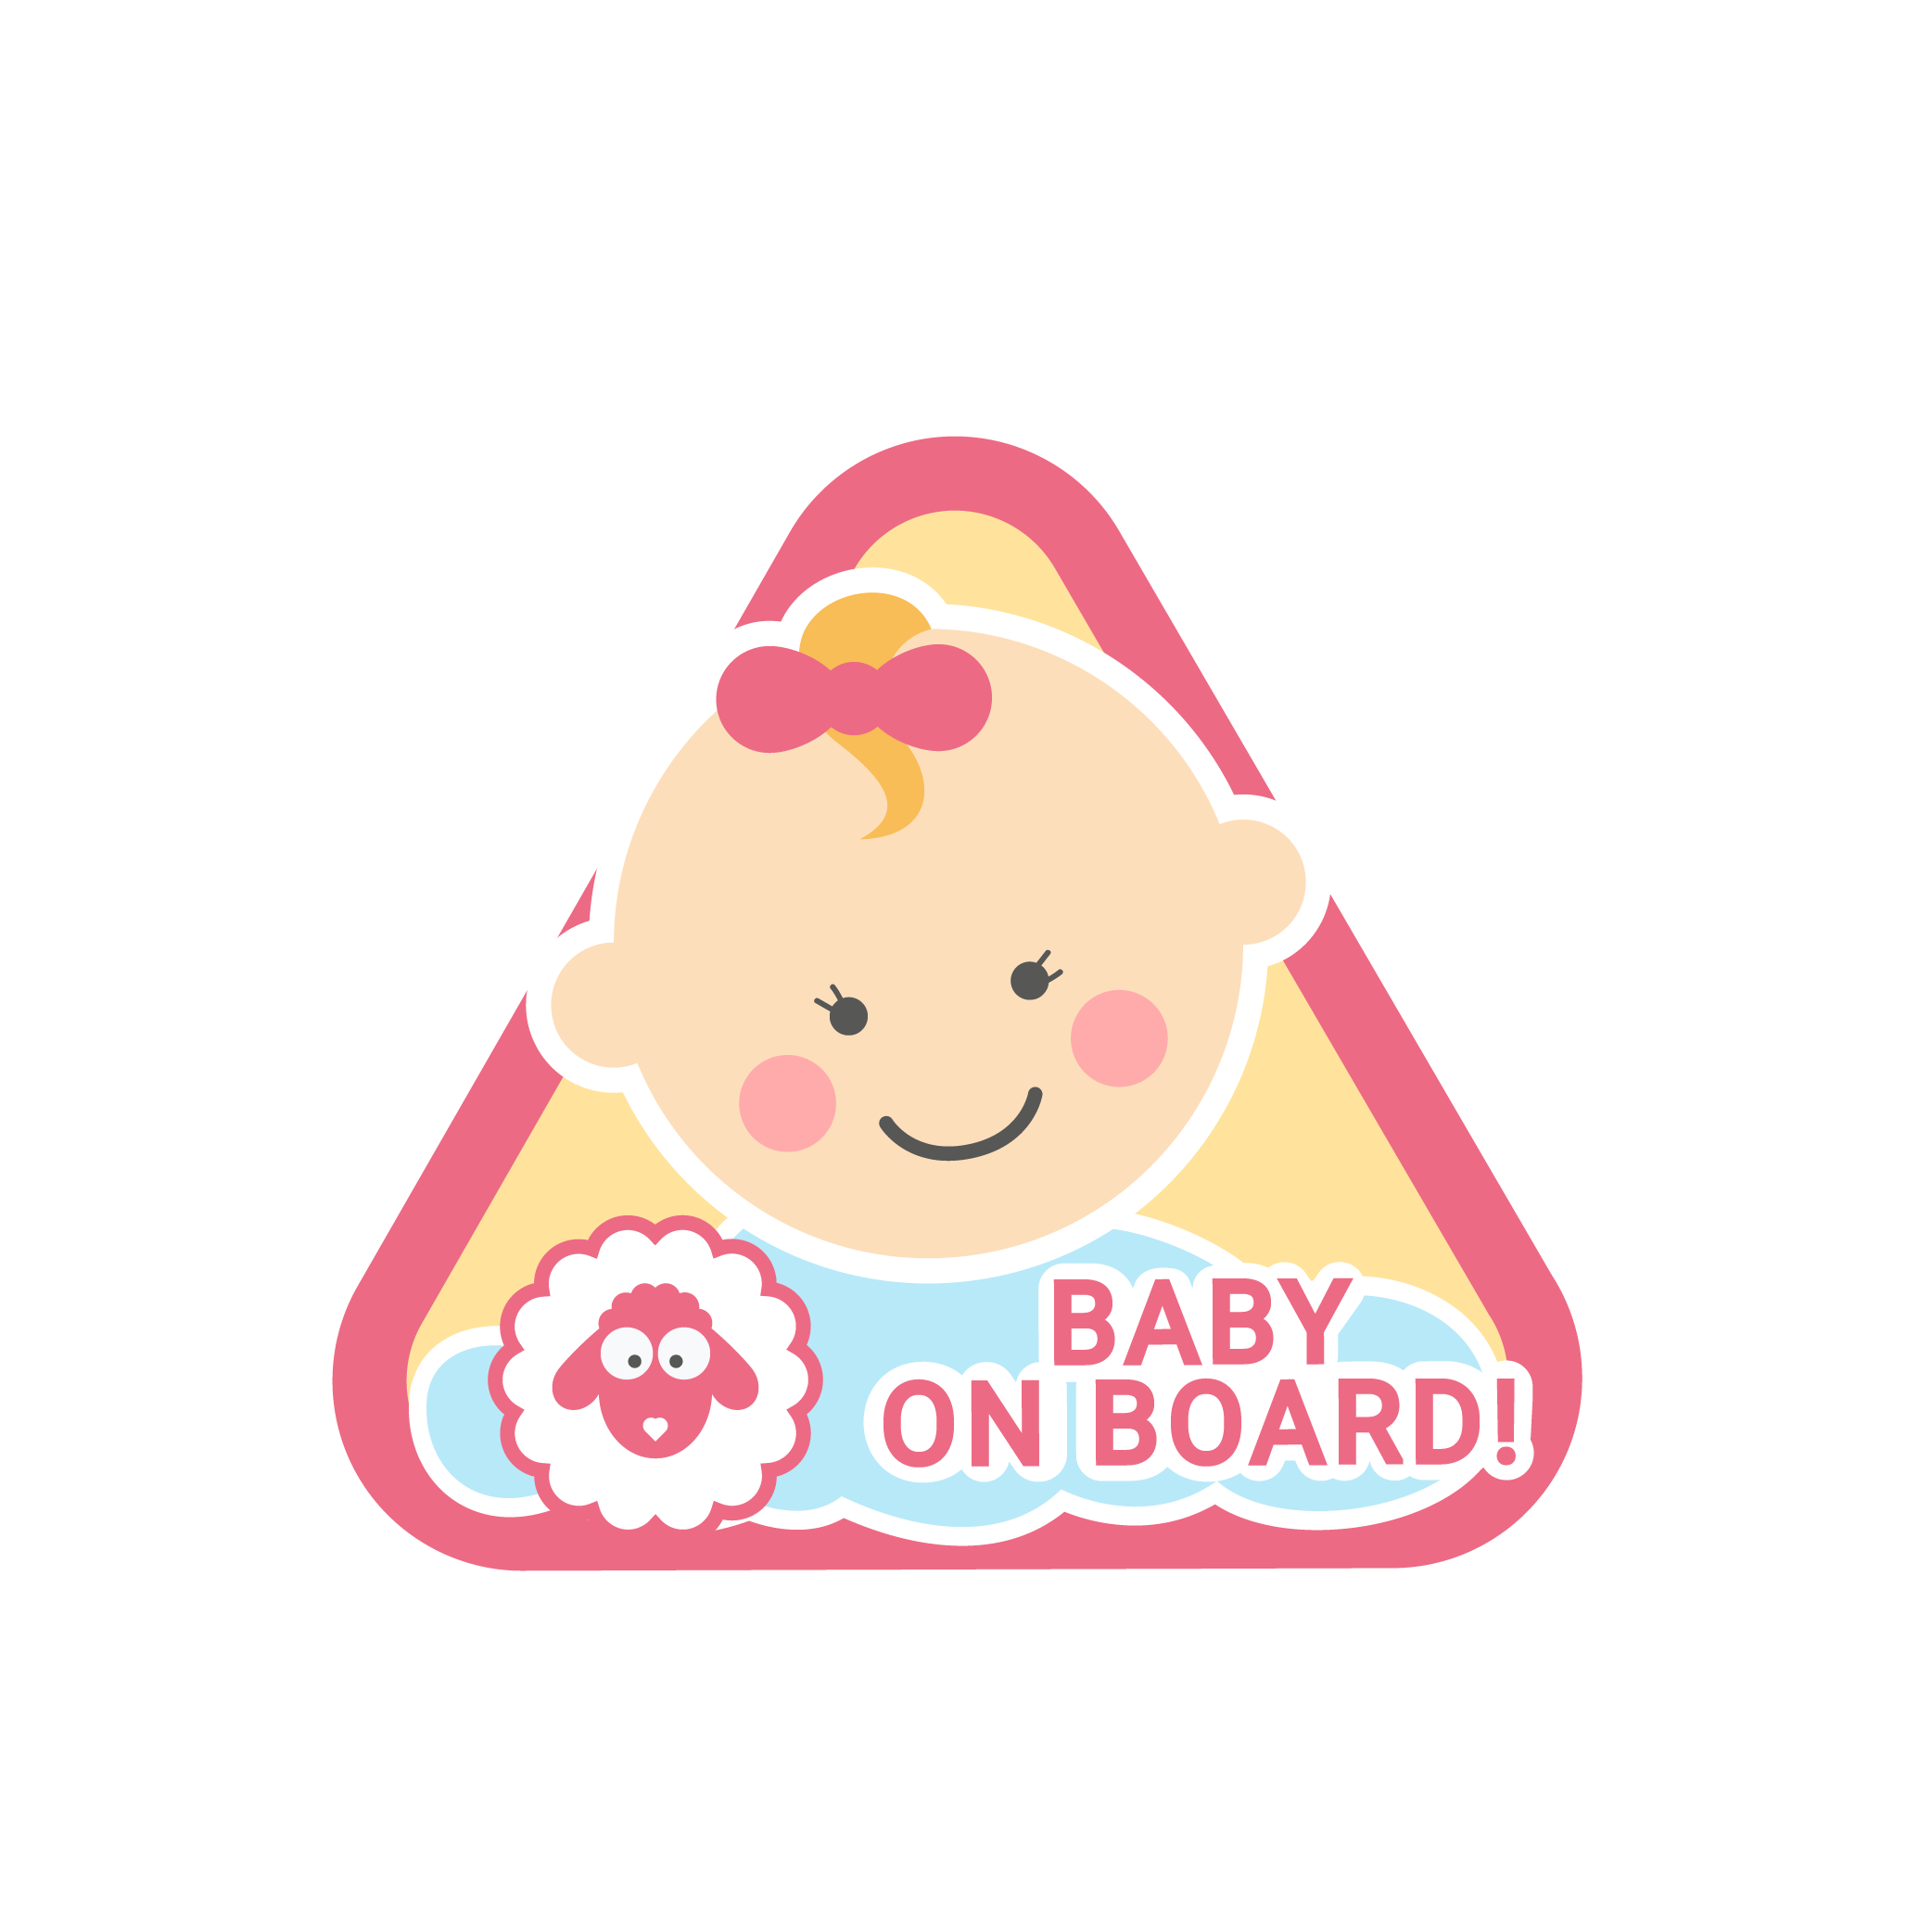 Baby on board girl